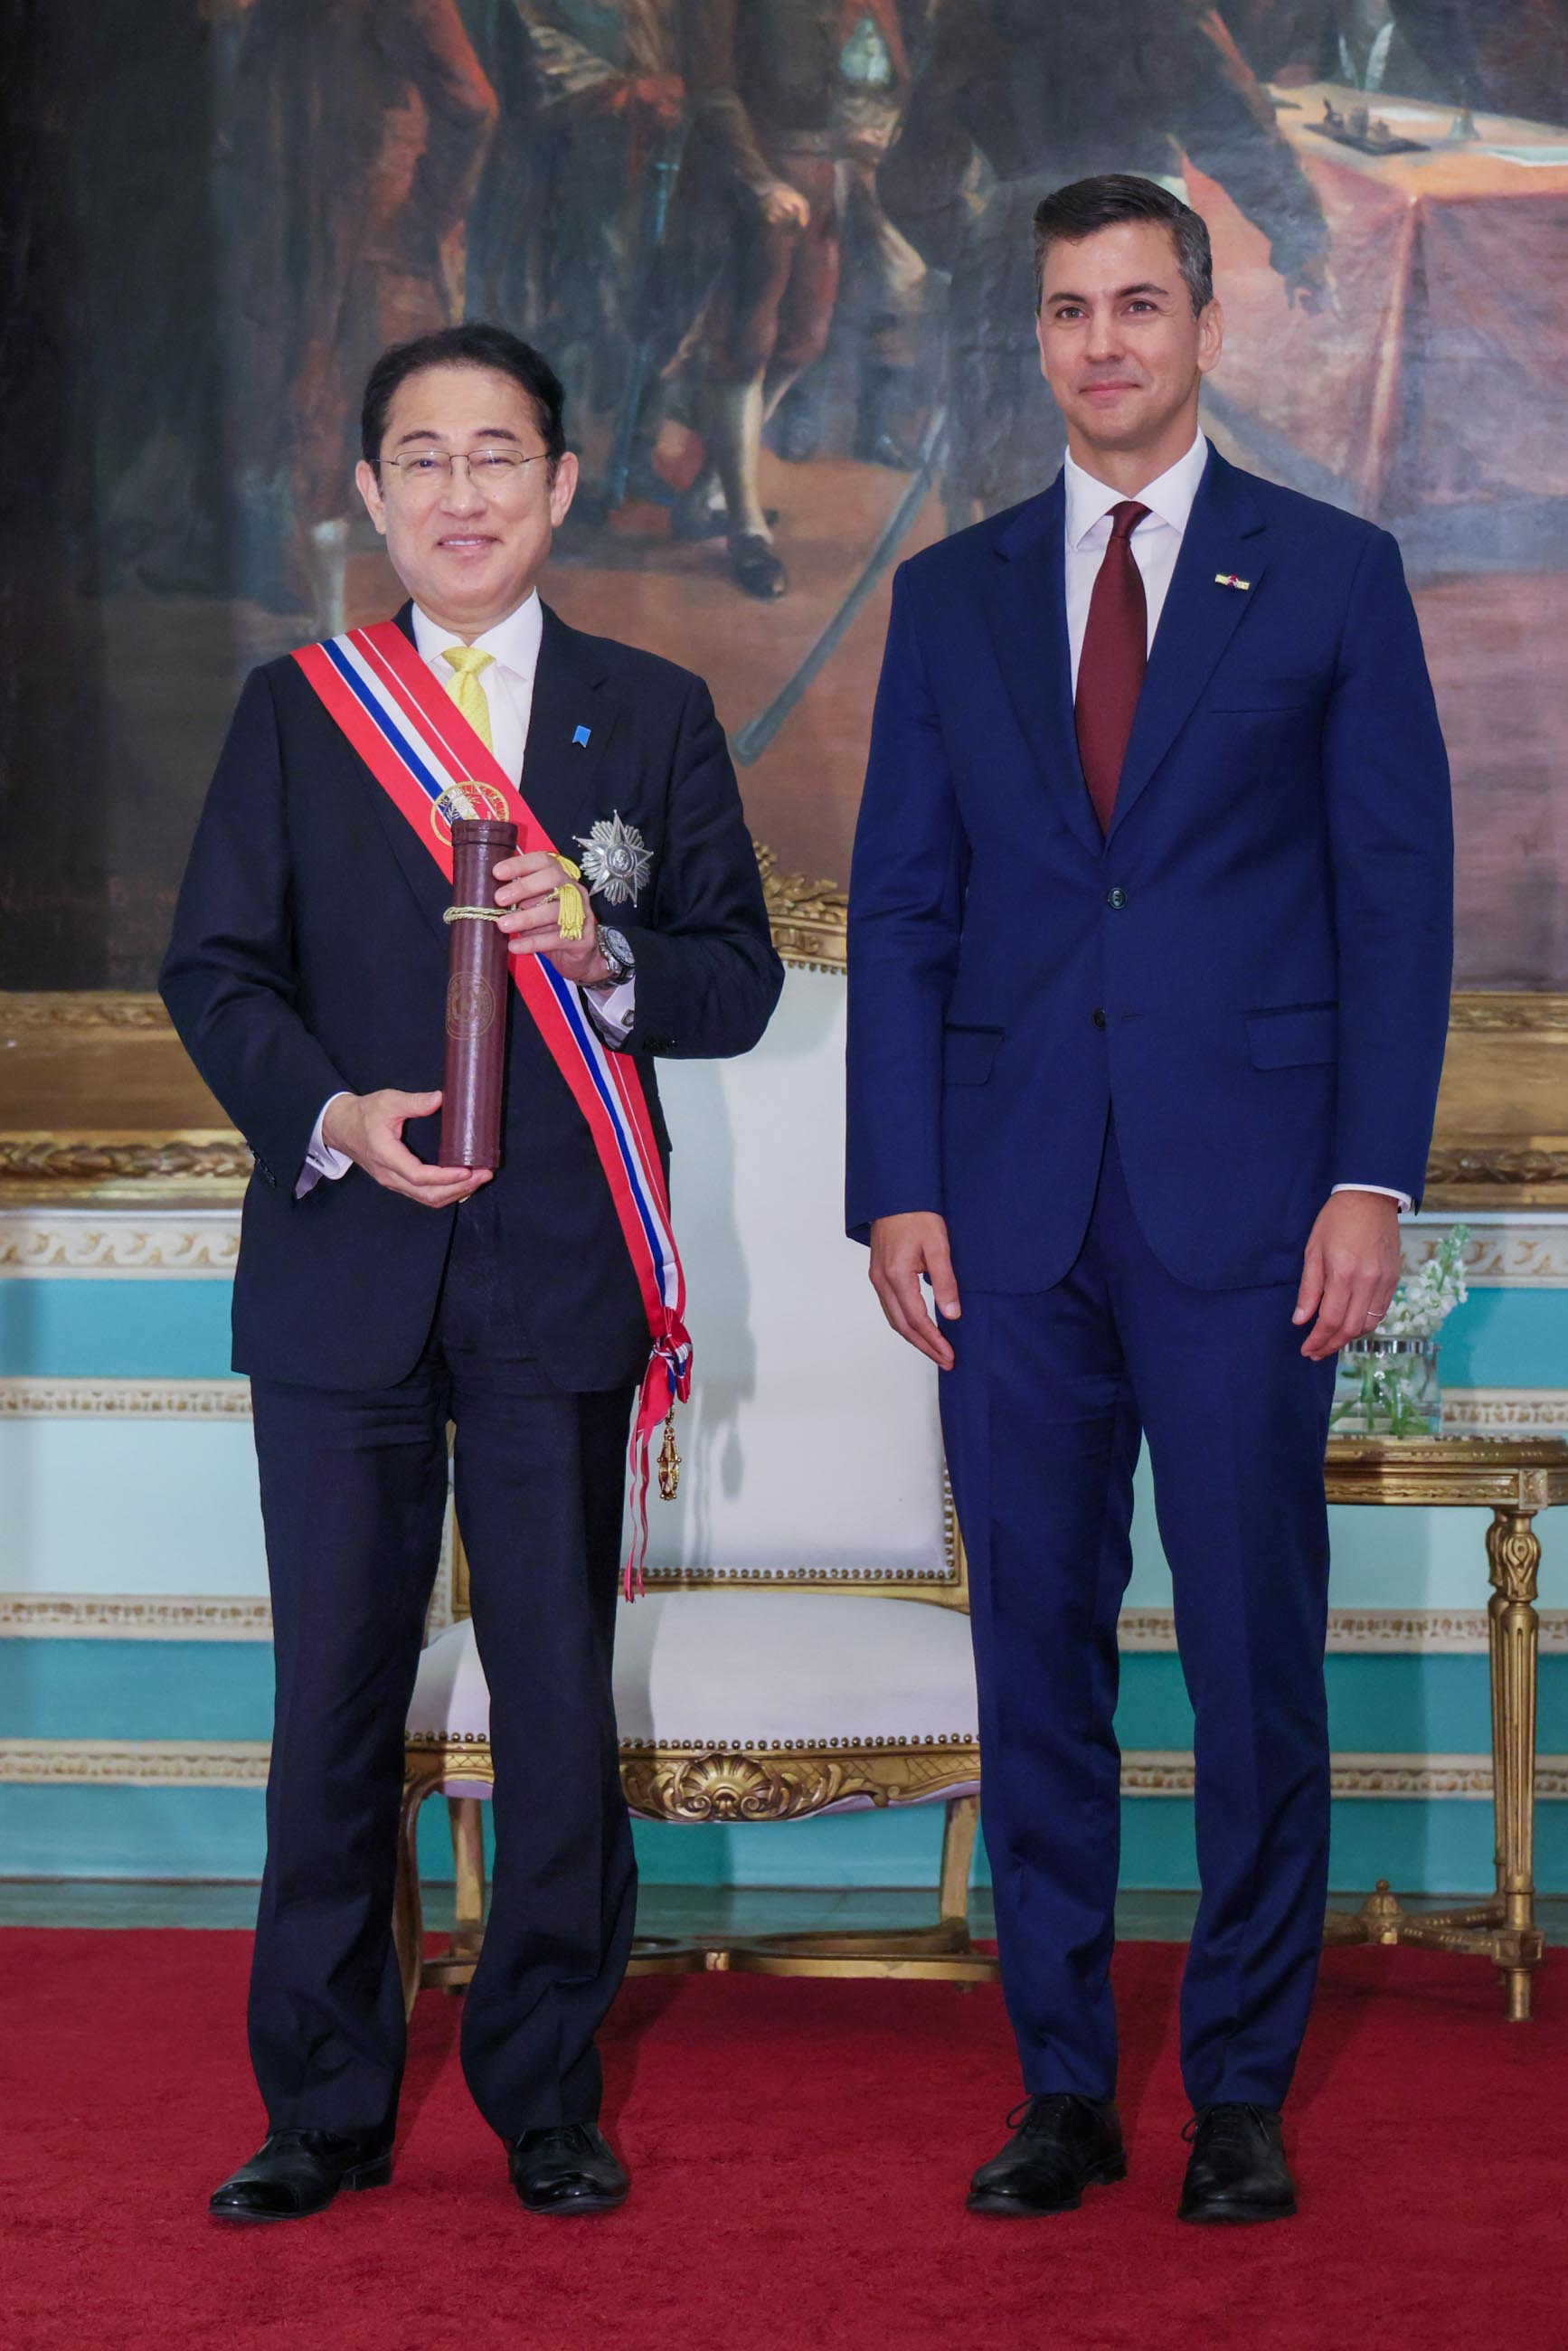 Prime Minister Kishida attending the decoration ceremony (3)